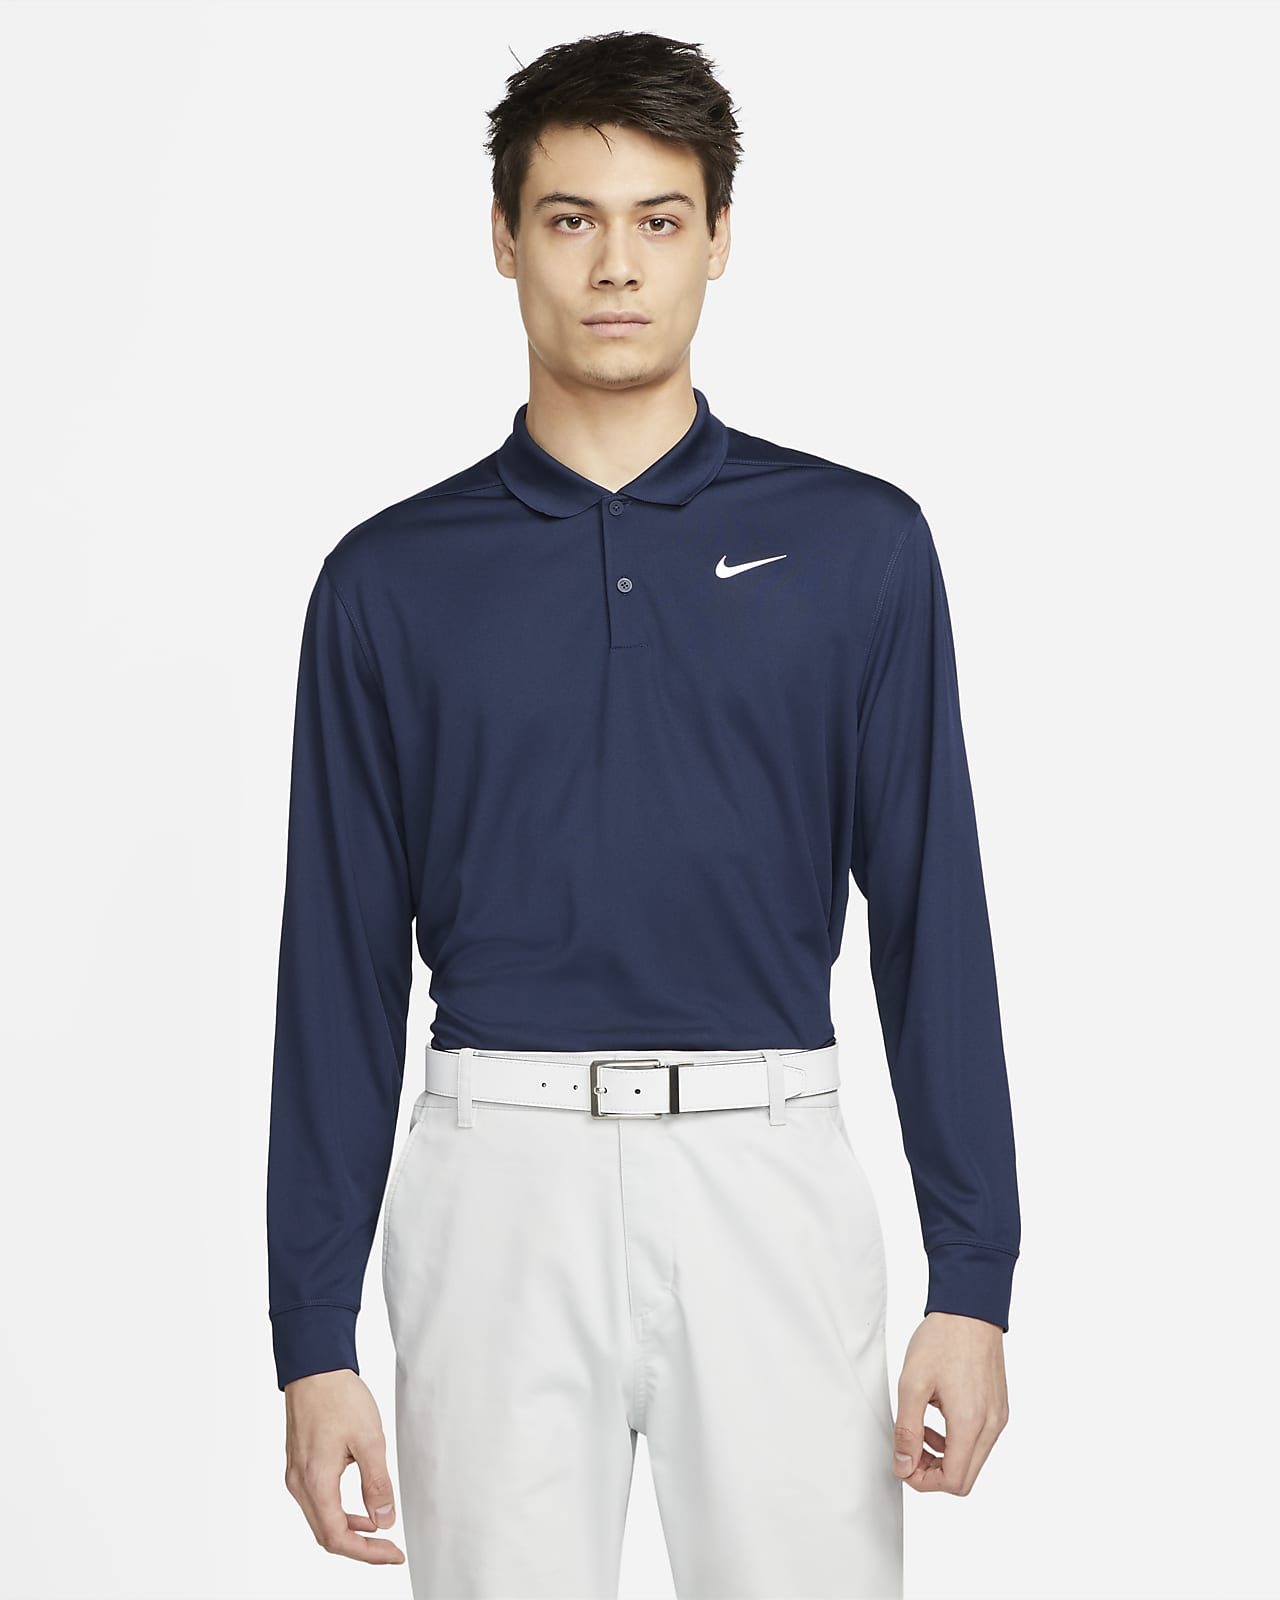 Nike Dri-FIT Victory Men's Golf Polo.